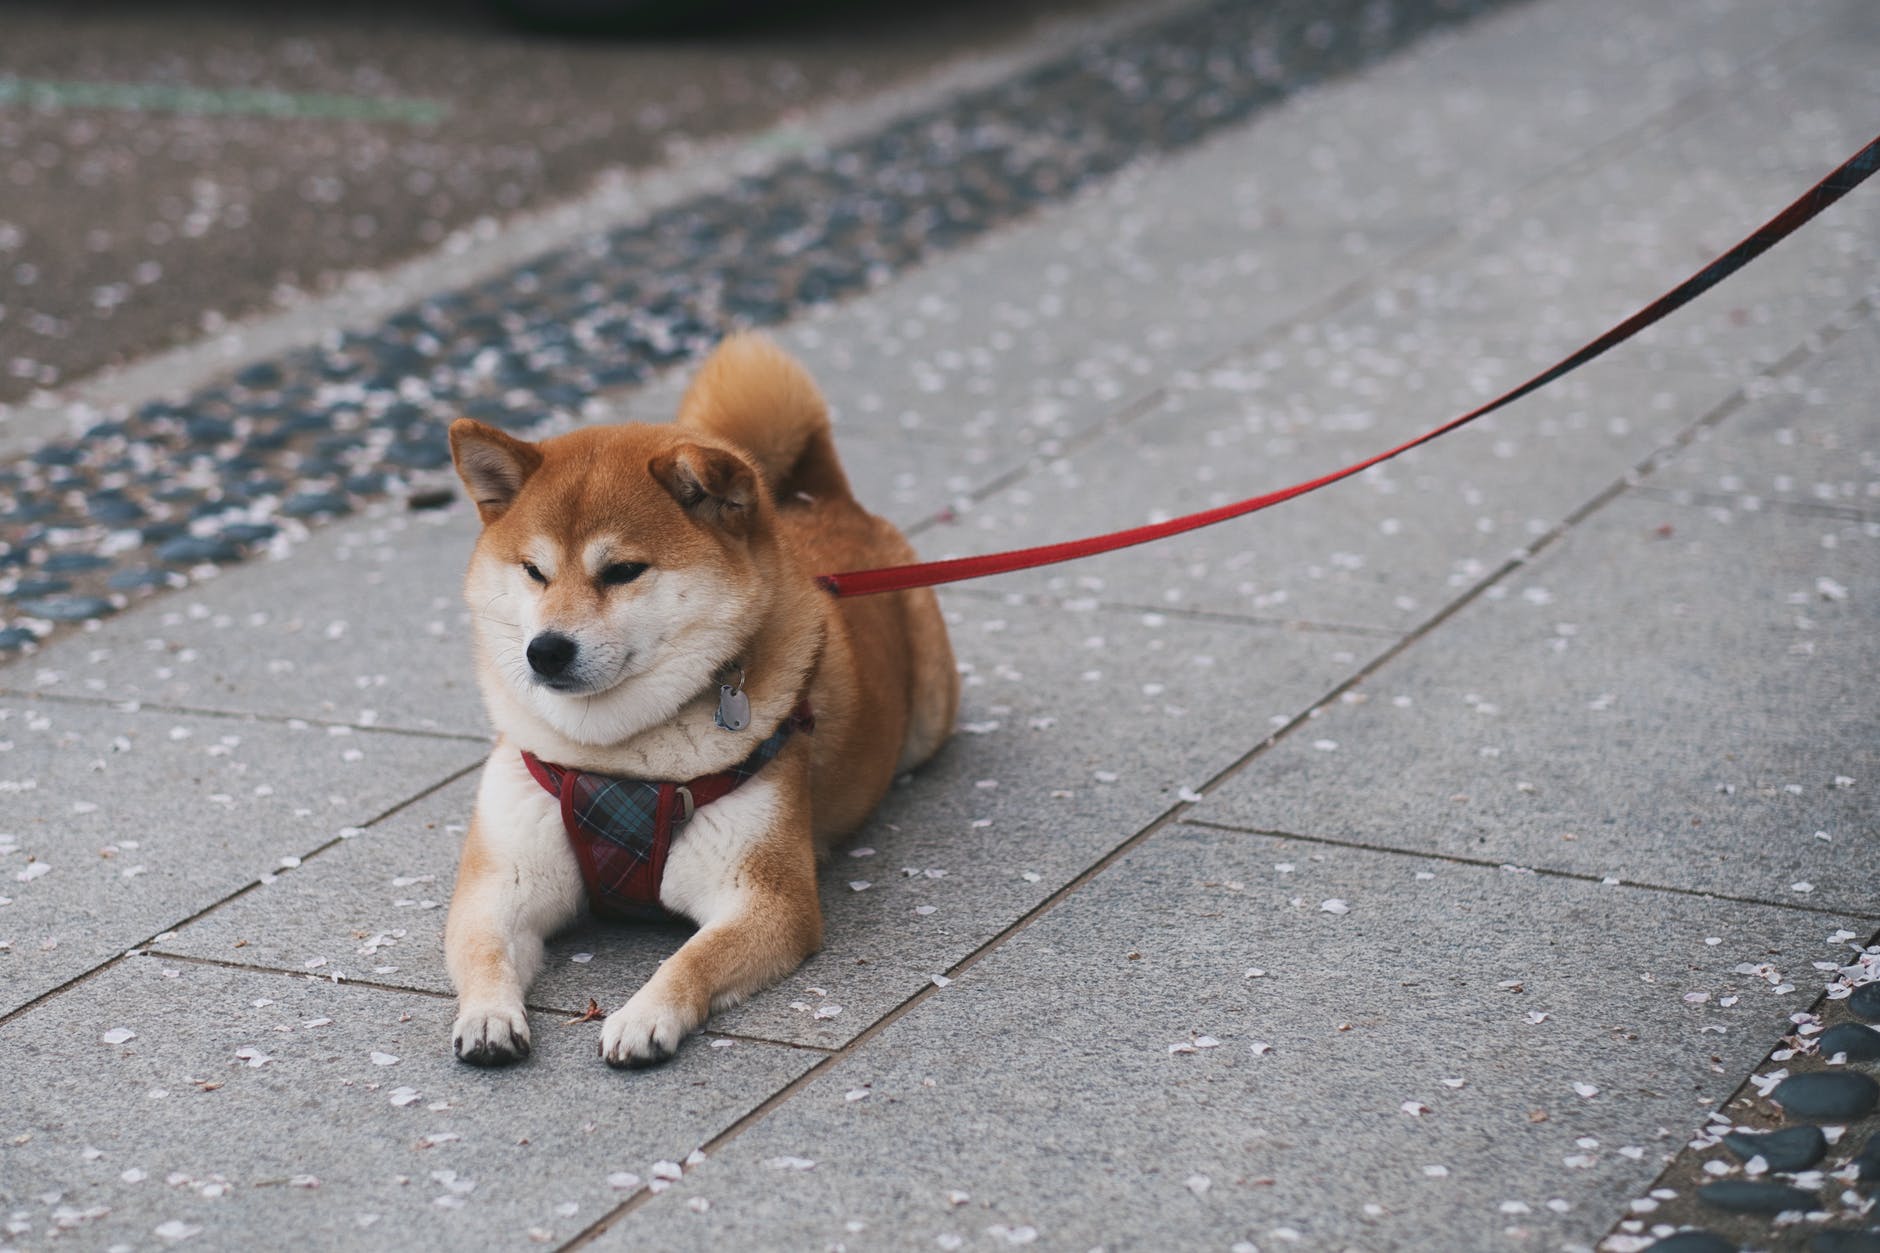 Shiba inu dog with red leash sitting down